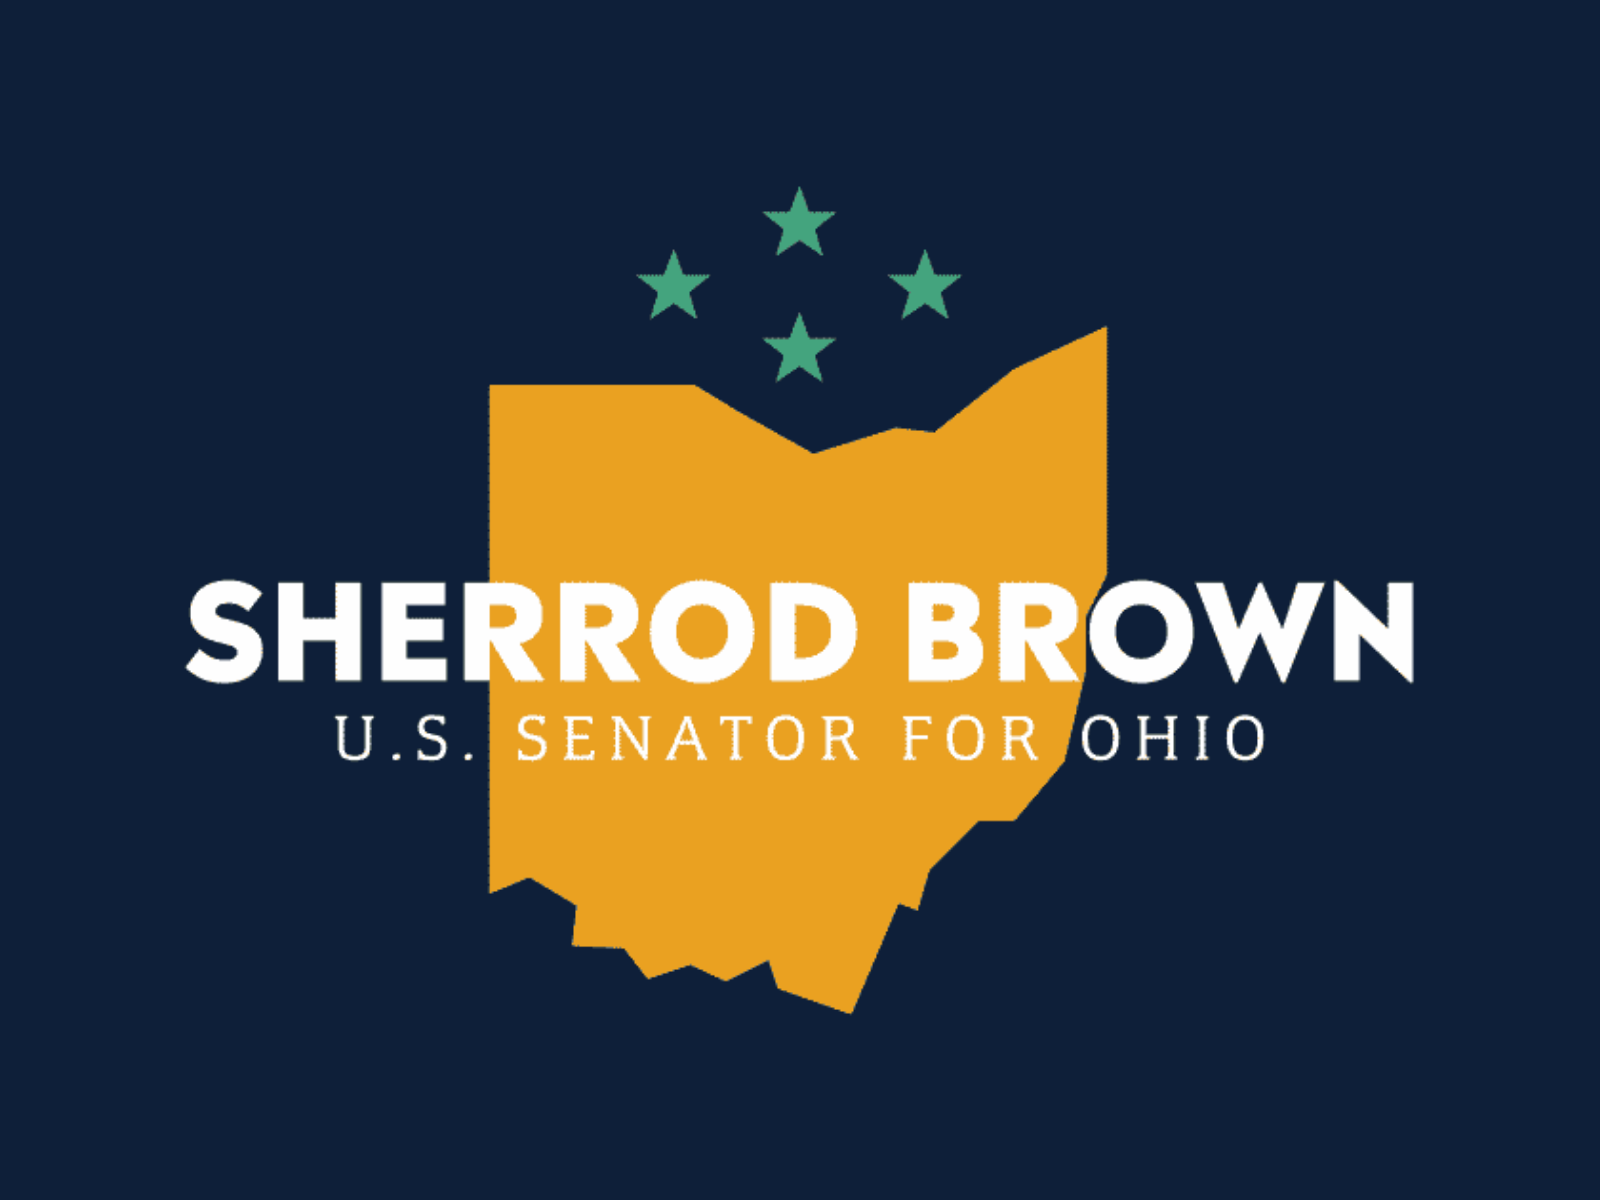 Sherrod Brown U.S. Senator For Ohio graphic